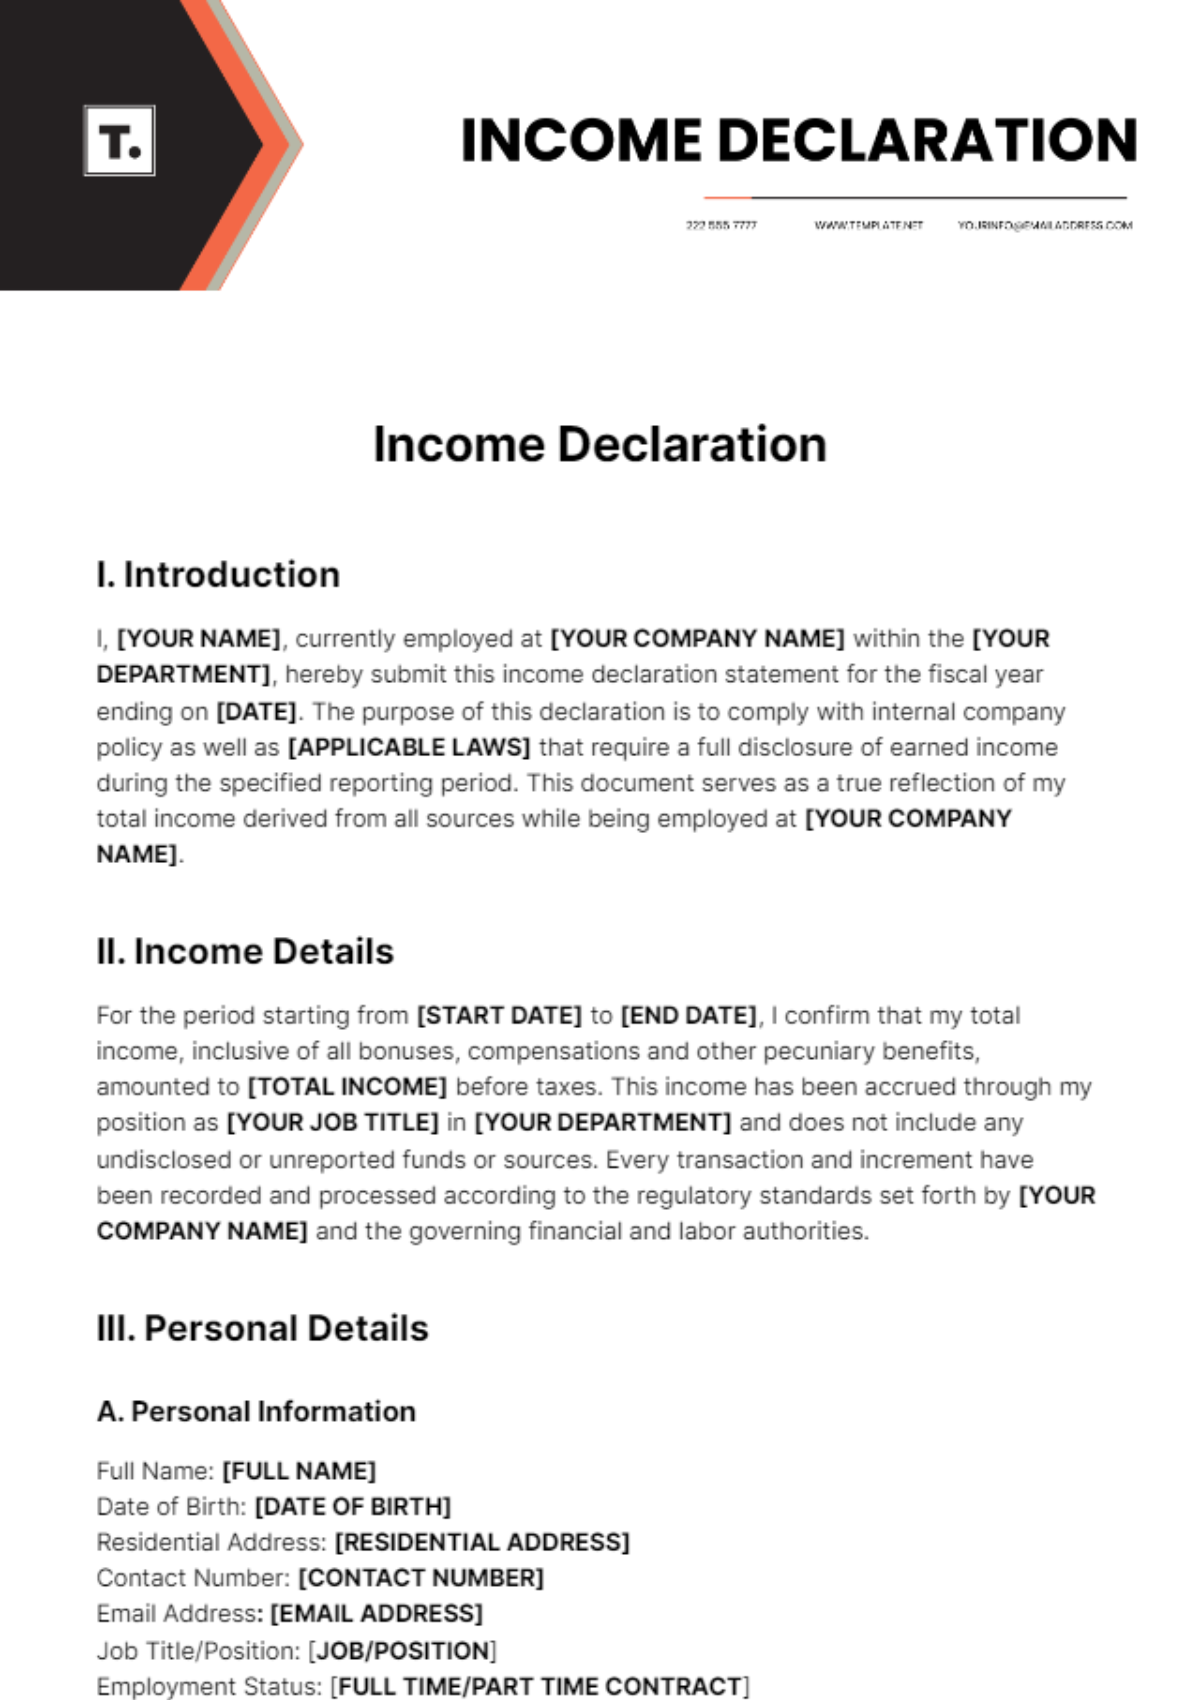 Income Declaration Template